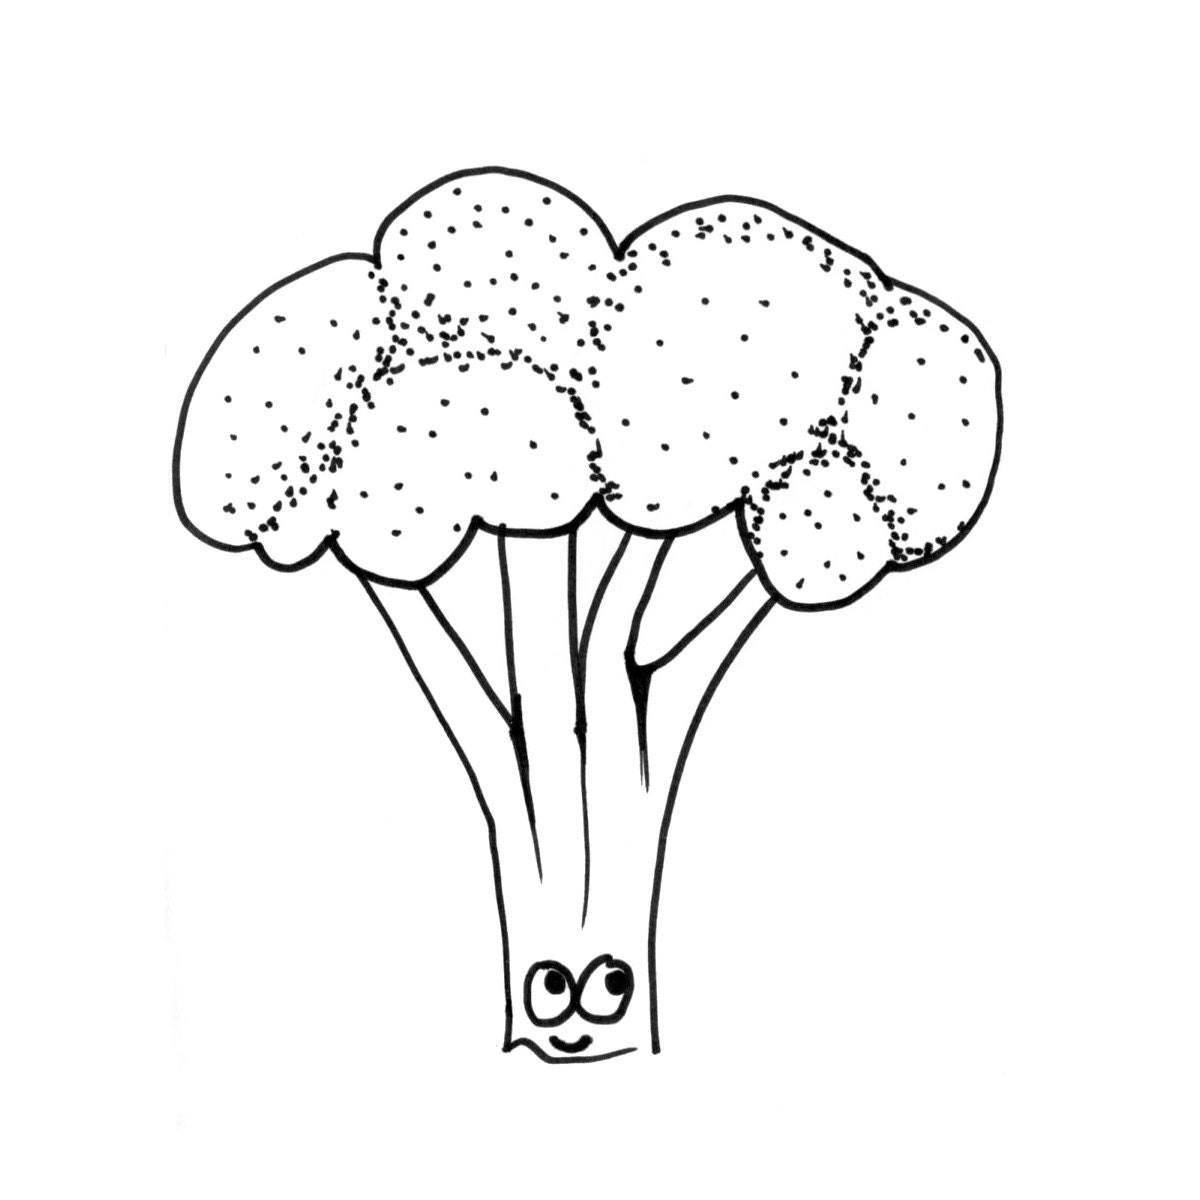 Broccoli for kids #14